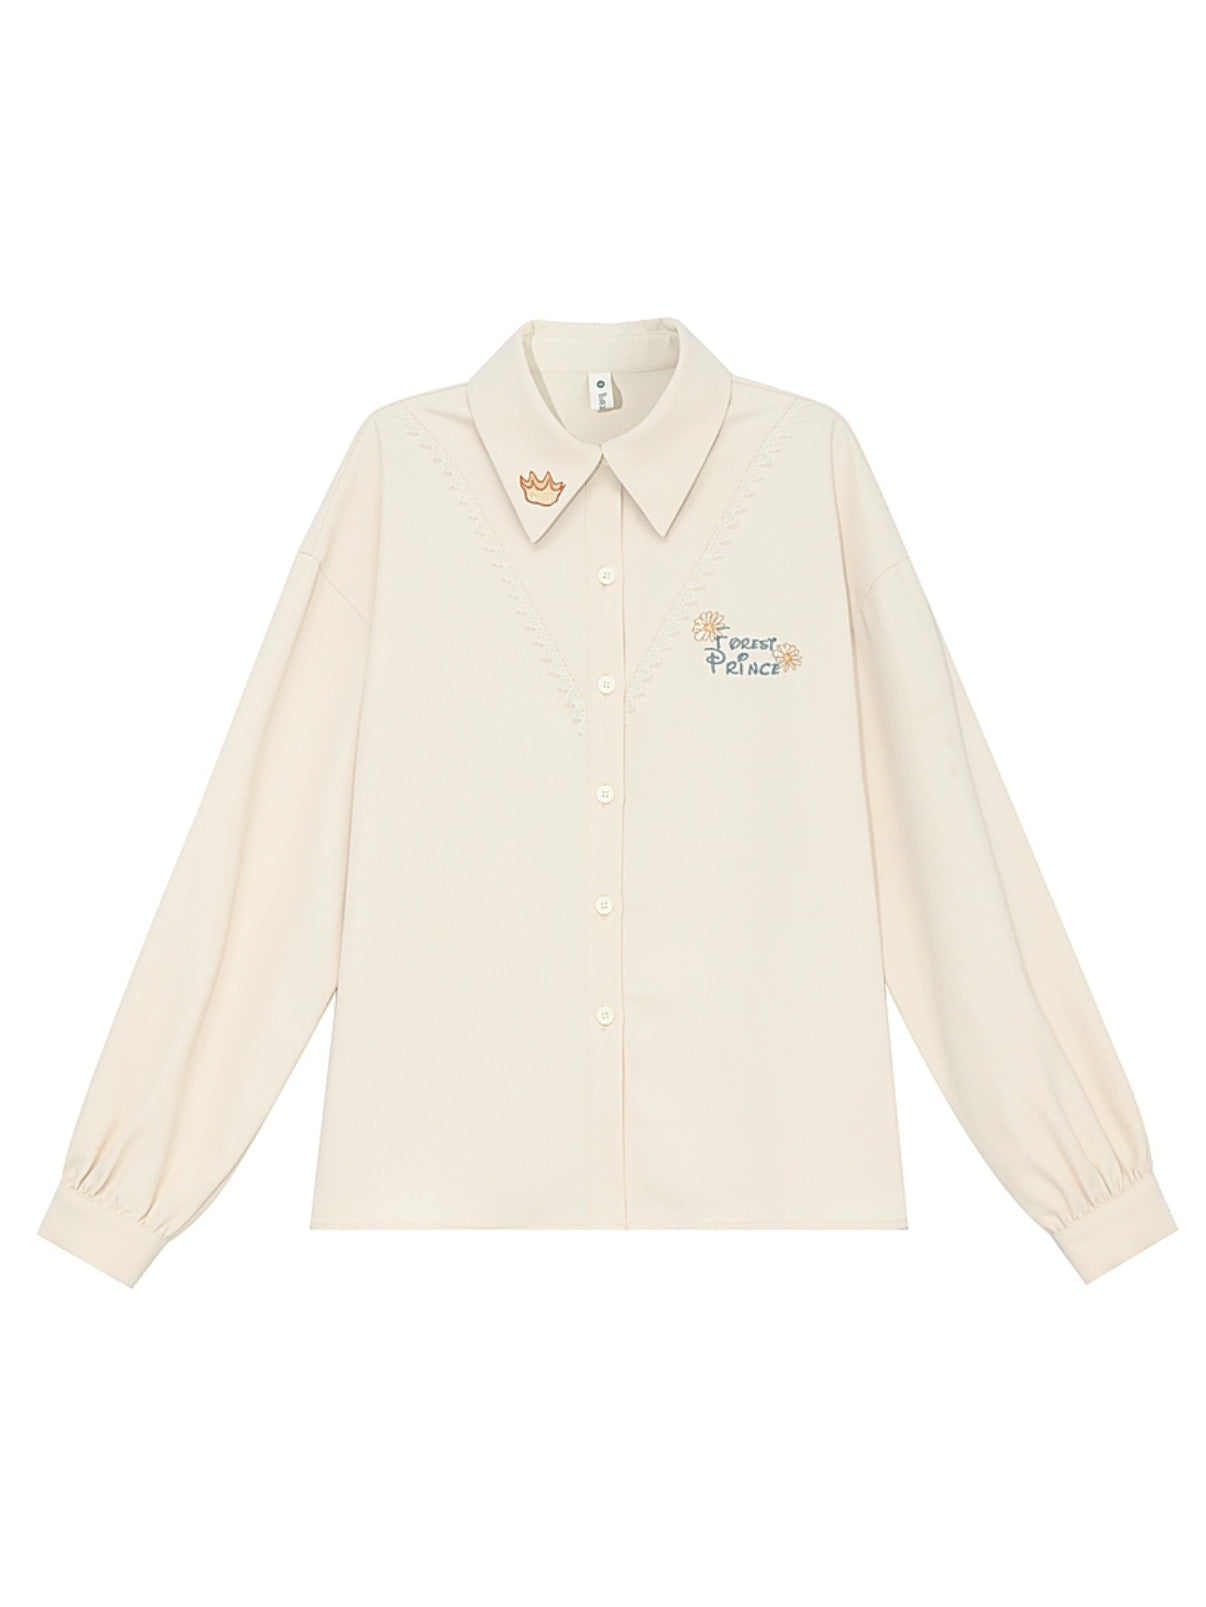 Forest Prince Maillard Vintage Button Up Shirt-ntbhshop